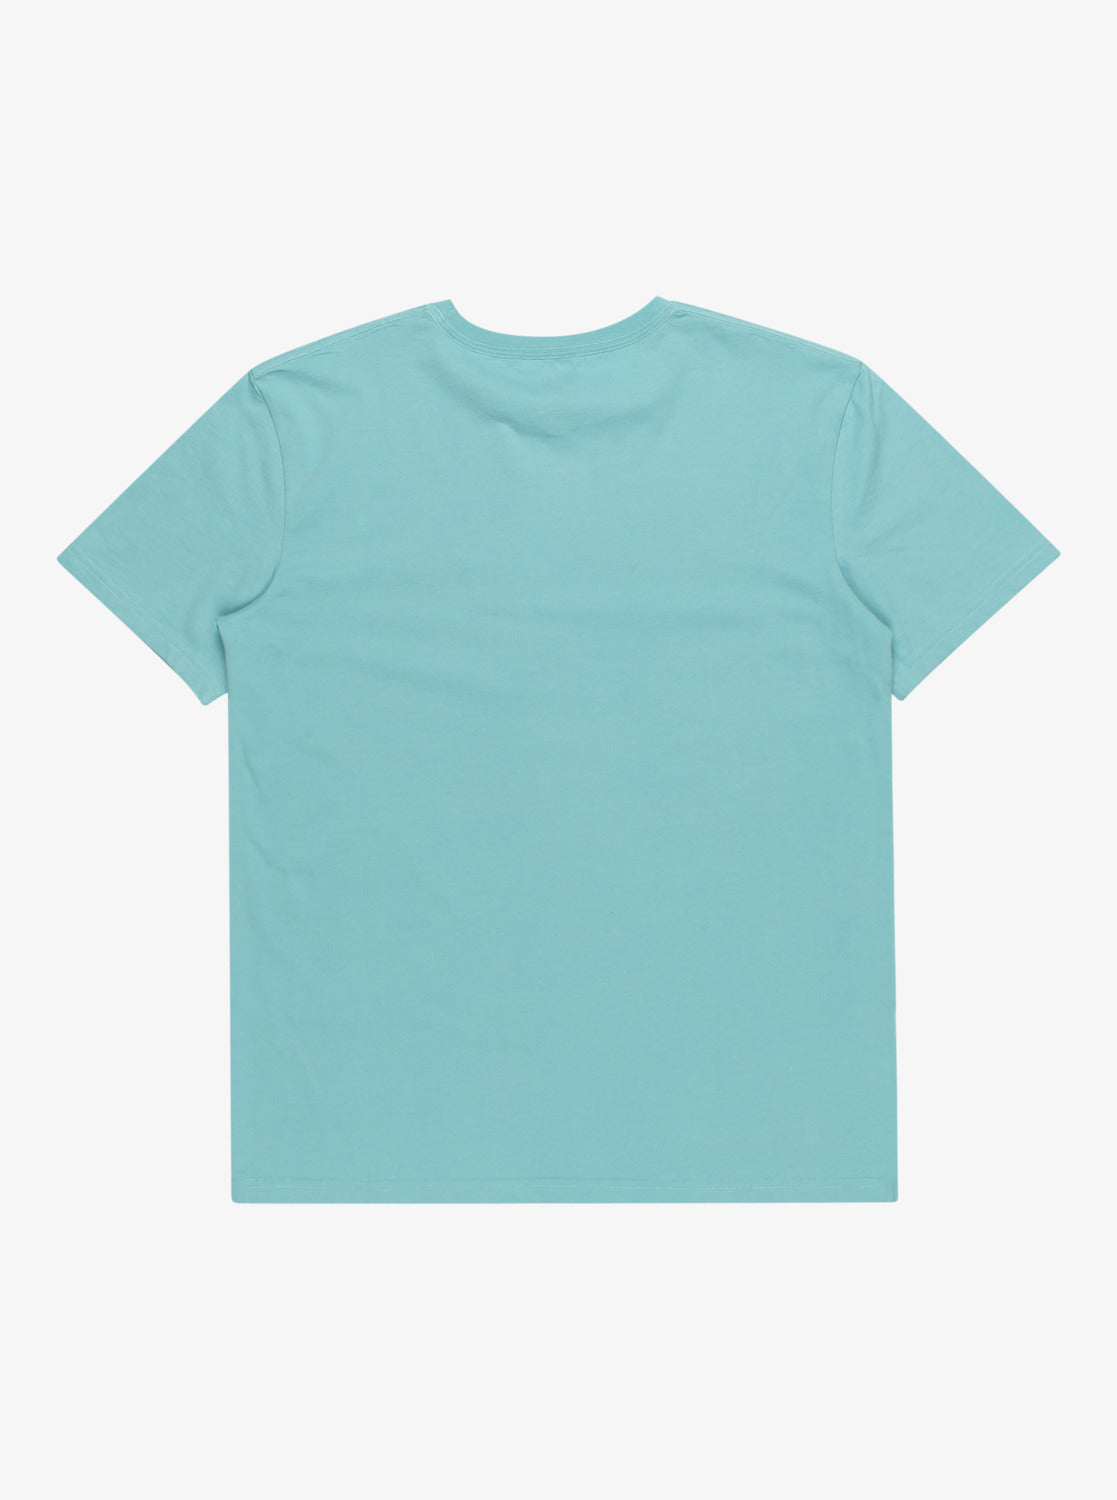 Quiksilver MW Mini T-Shirt in Marine Blue